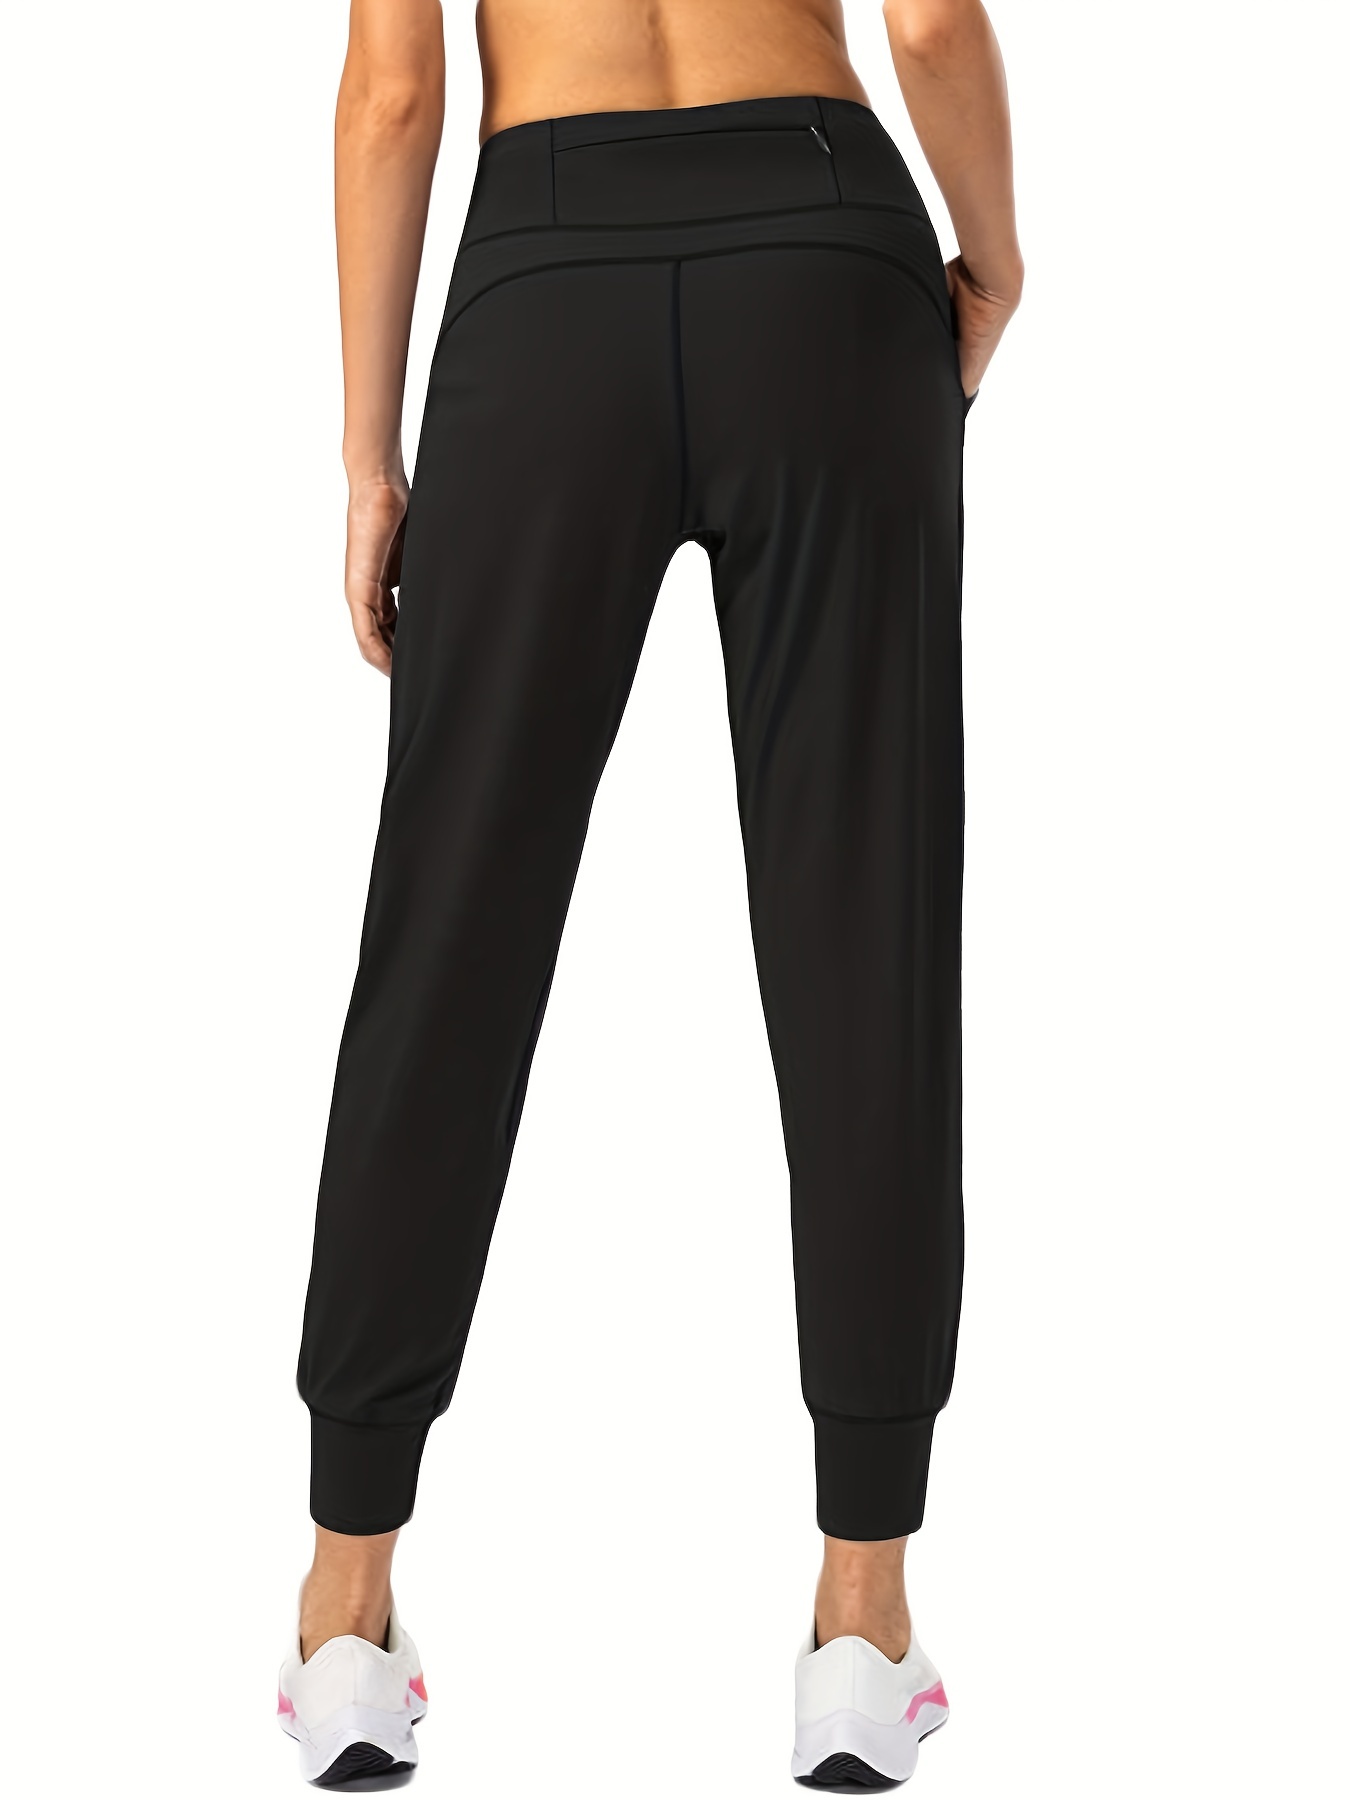 Women's Black Sweatpants  Joggers with Zip Pockets